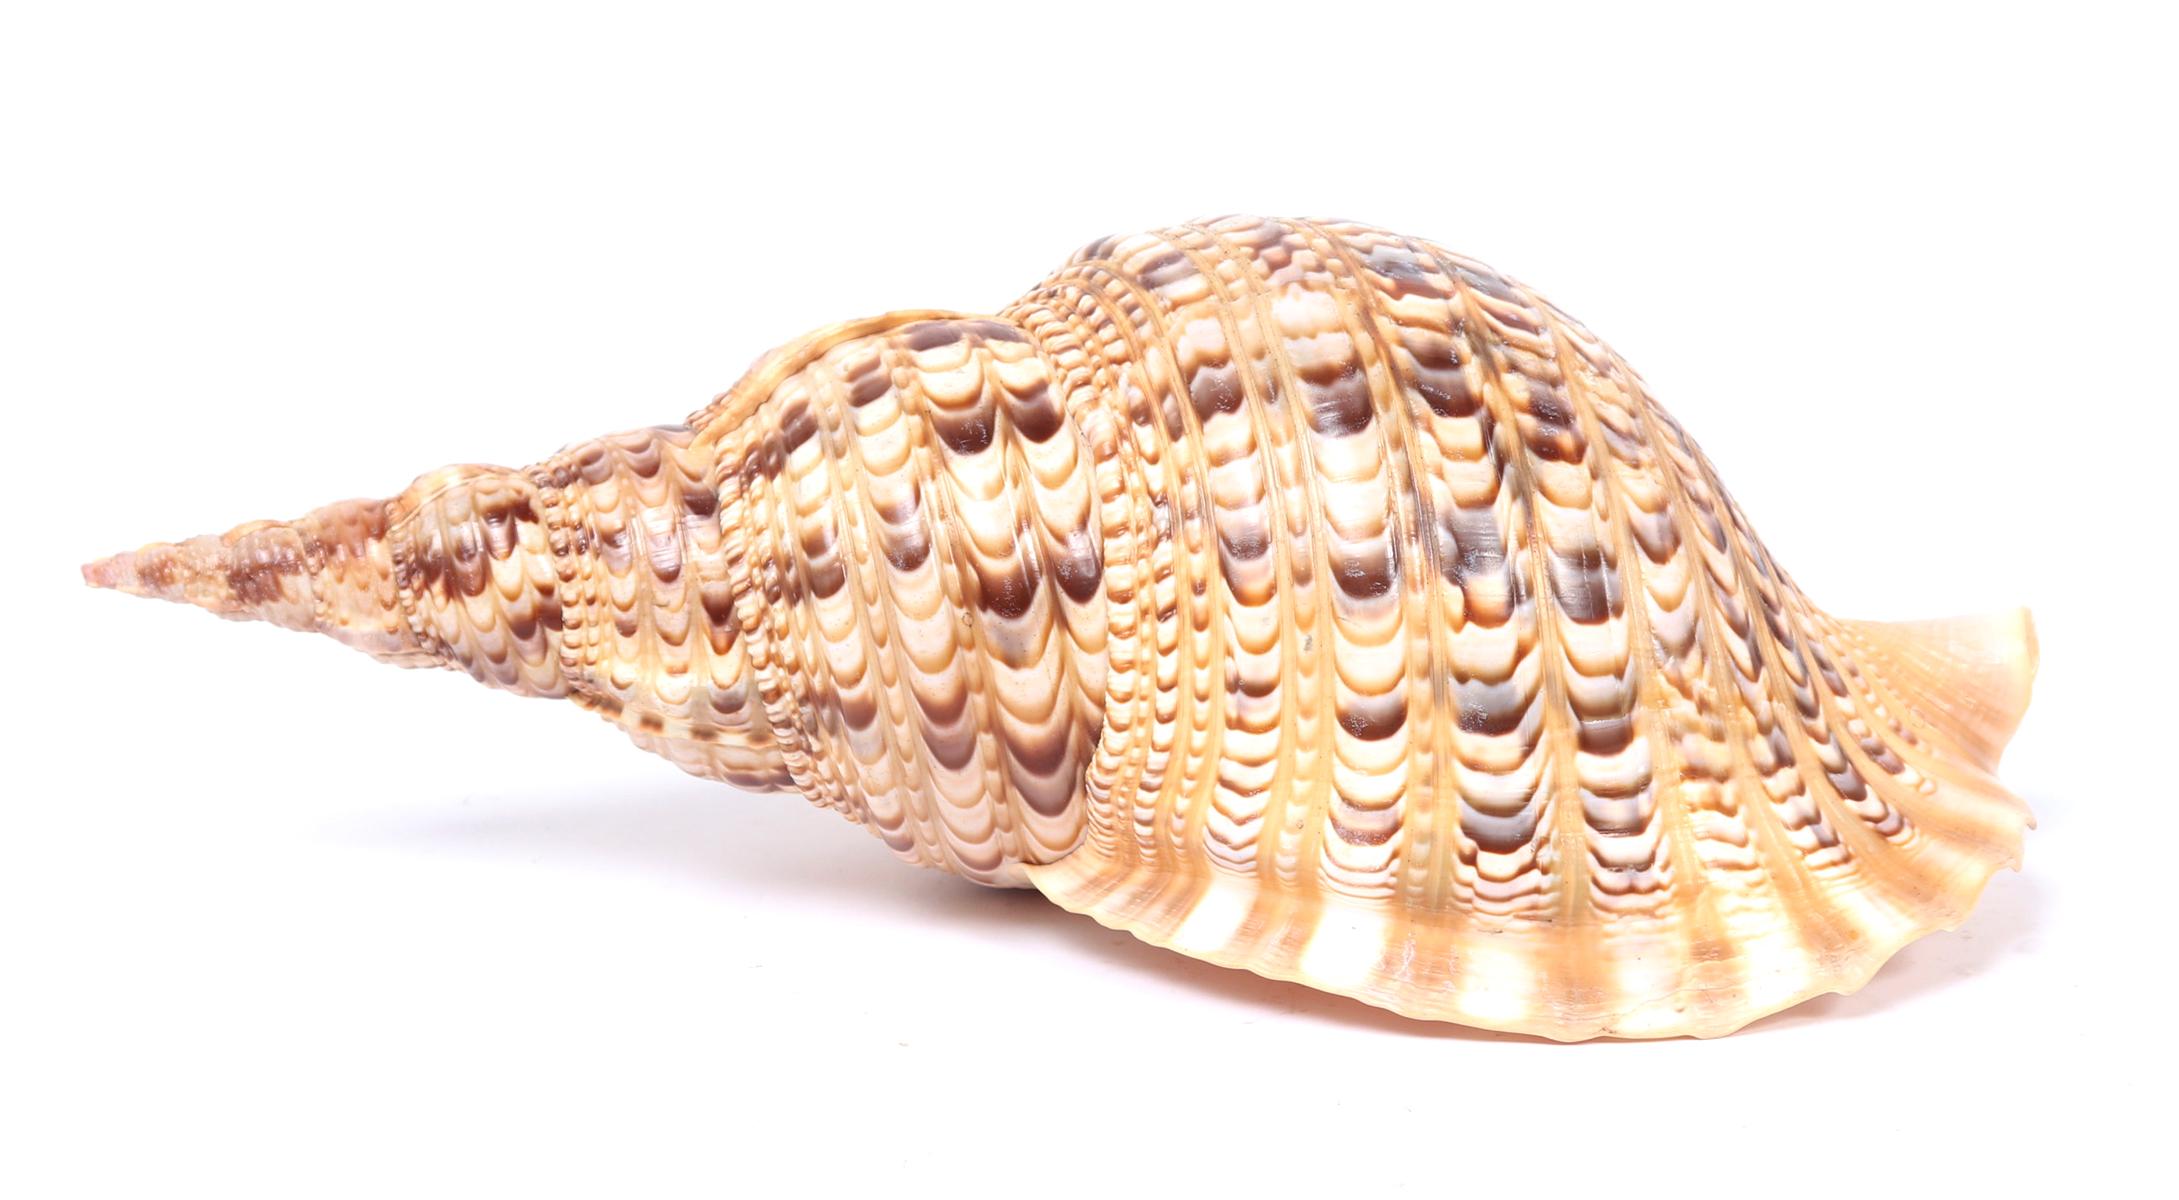 Triton Sea Shell, Charonia Tritonis, Fifteen Inches Long